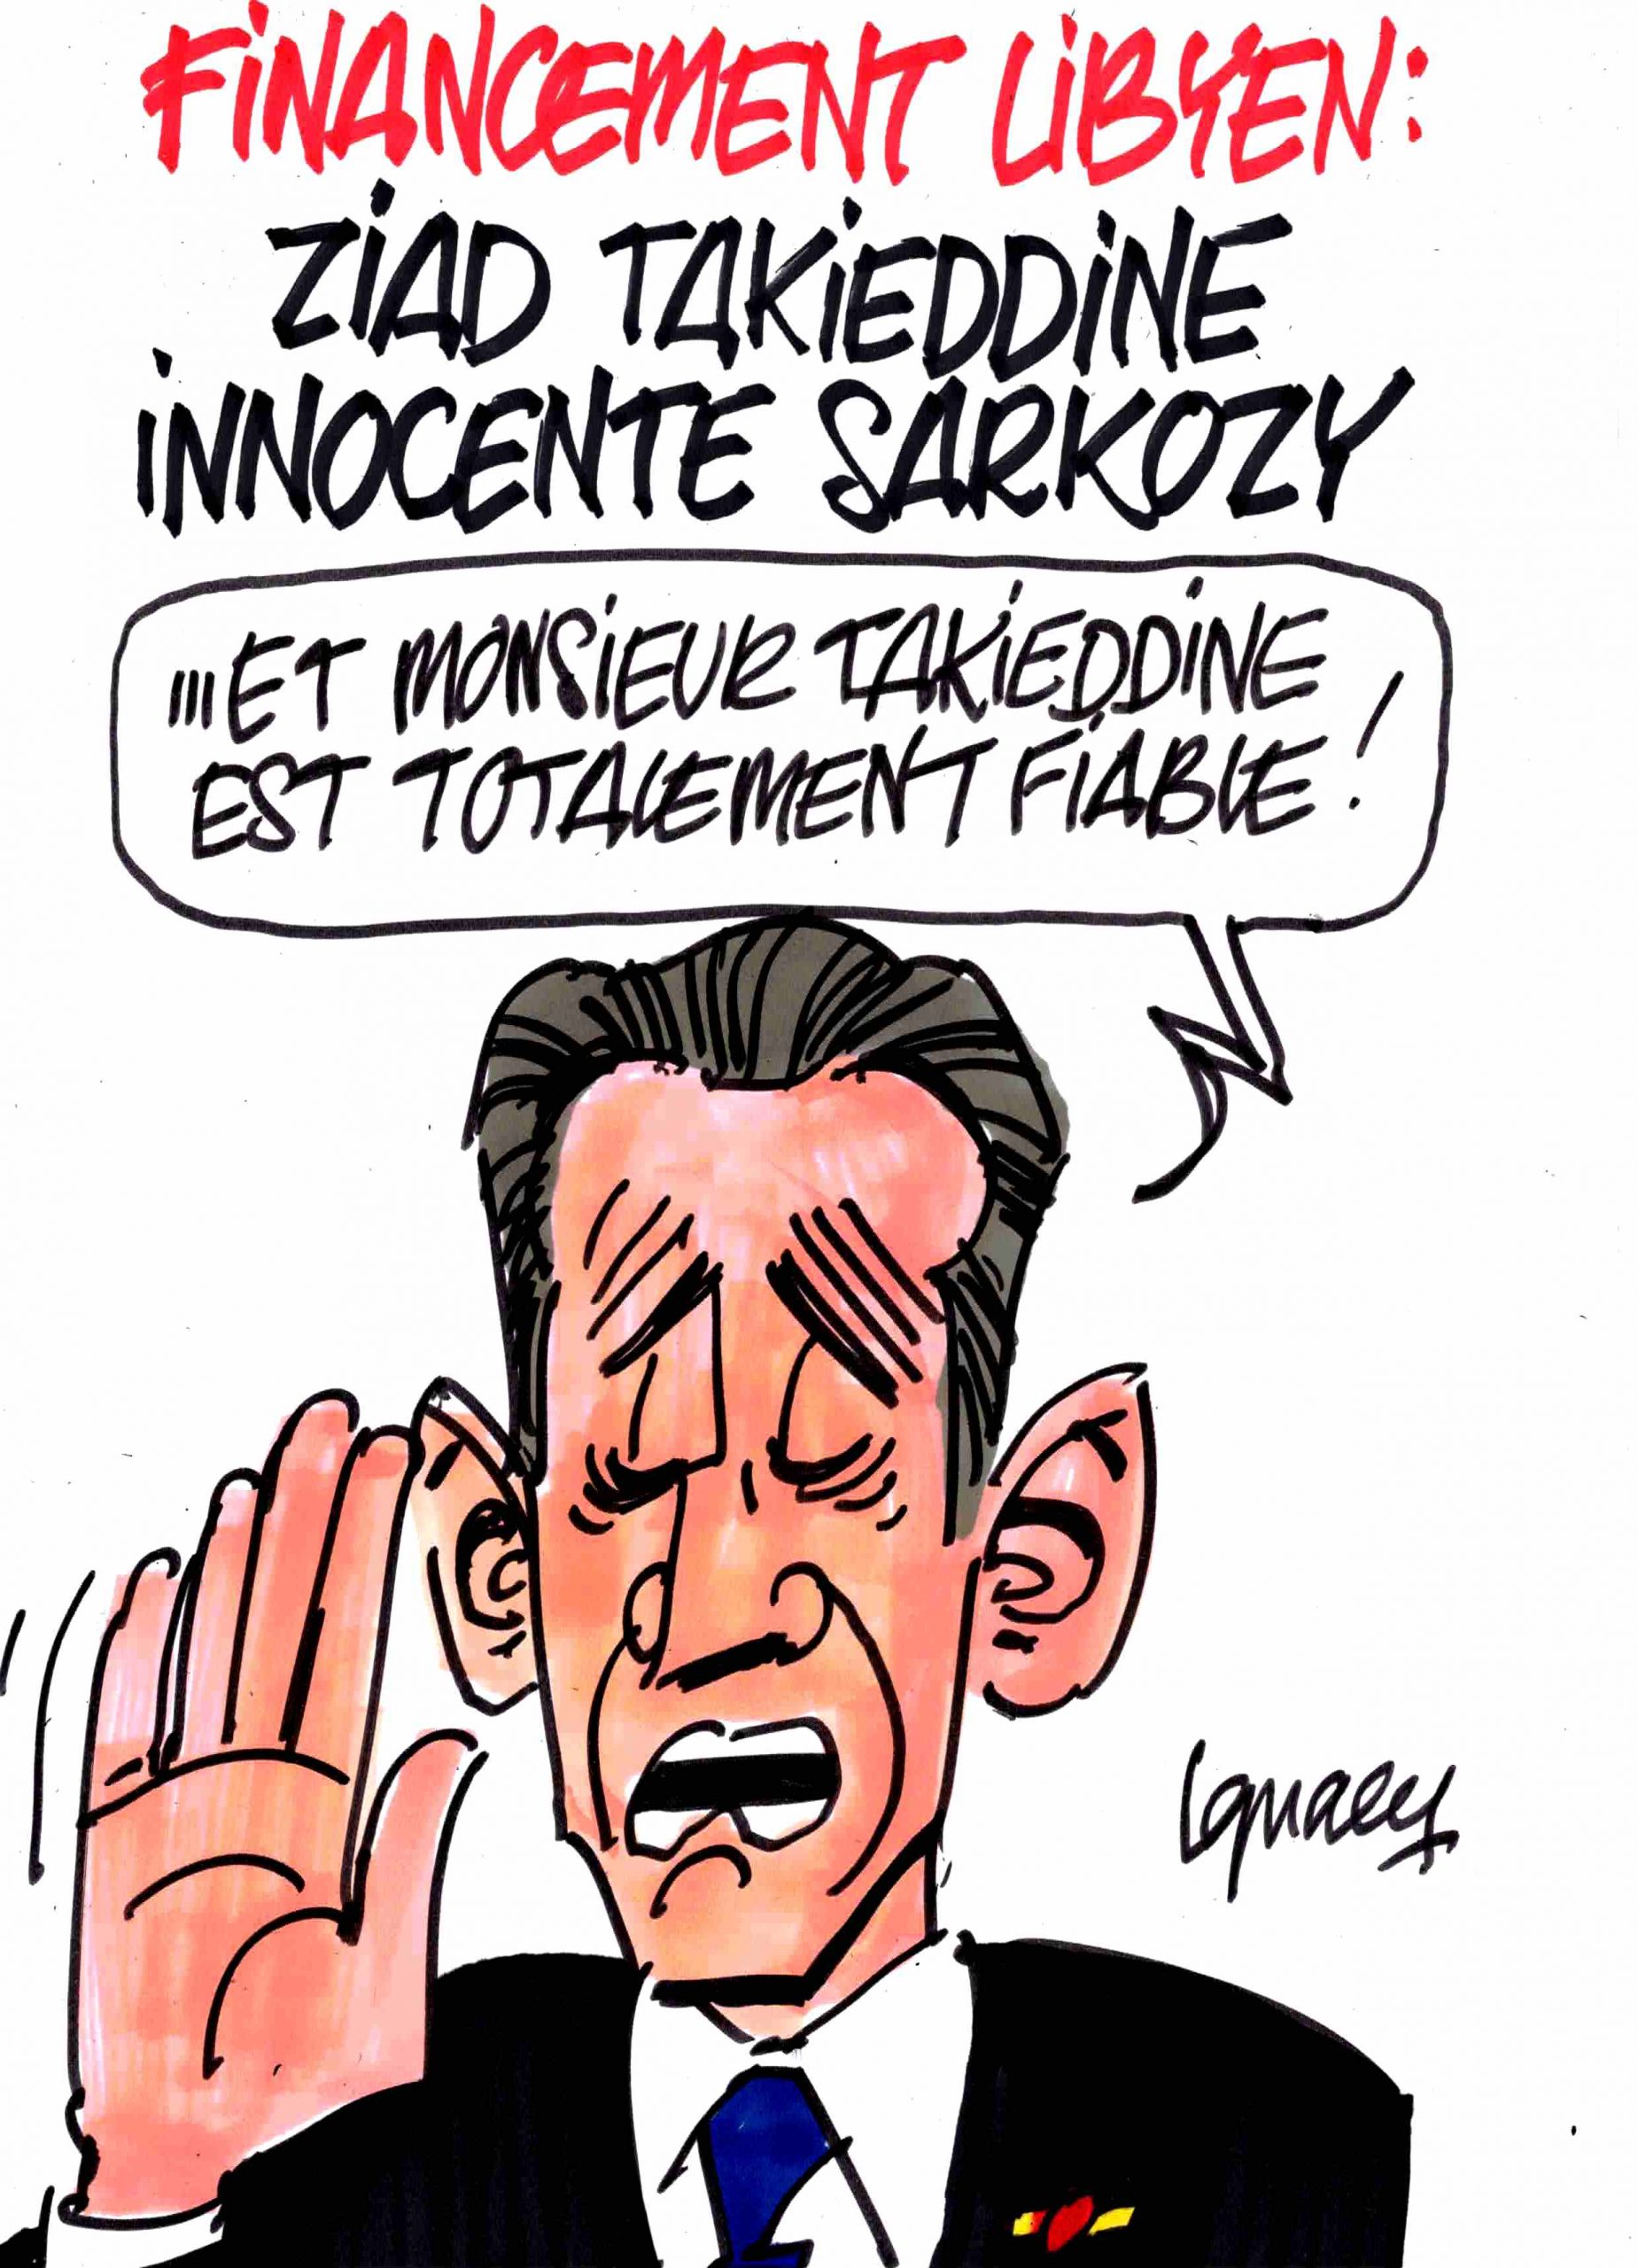 Ignace - Takieddine innocente Sarkozy